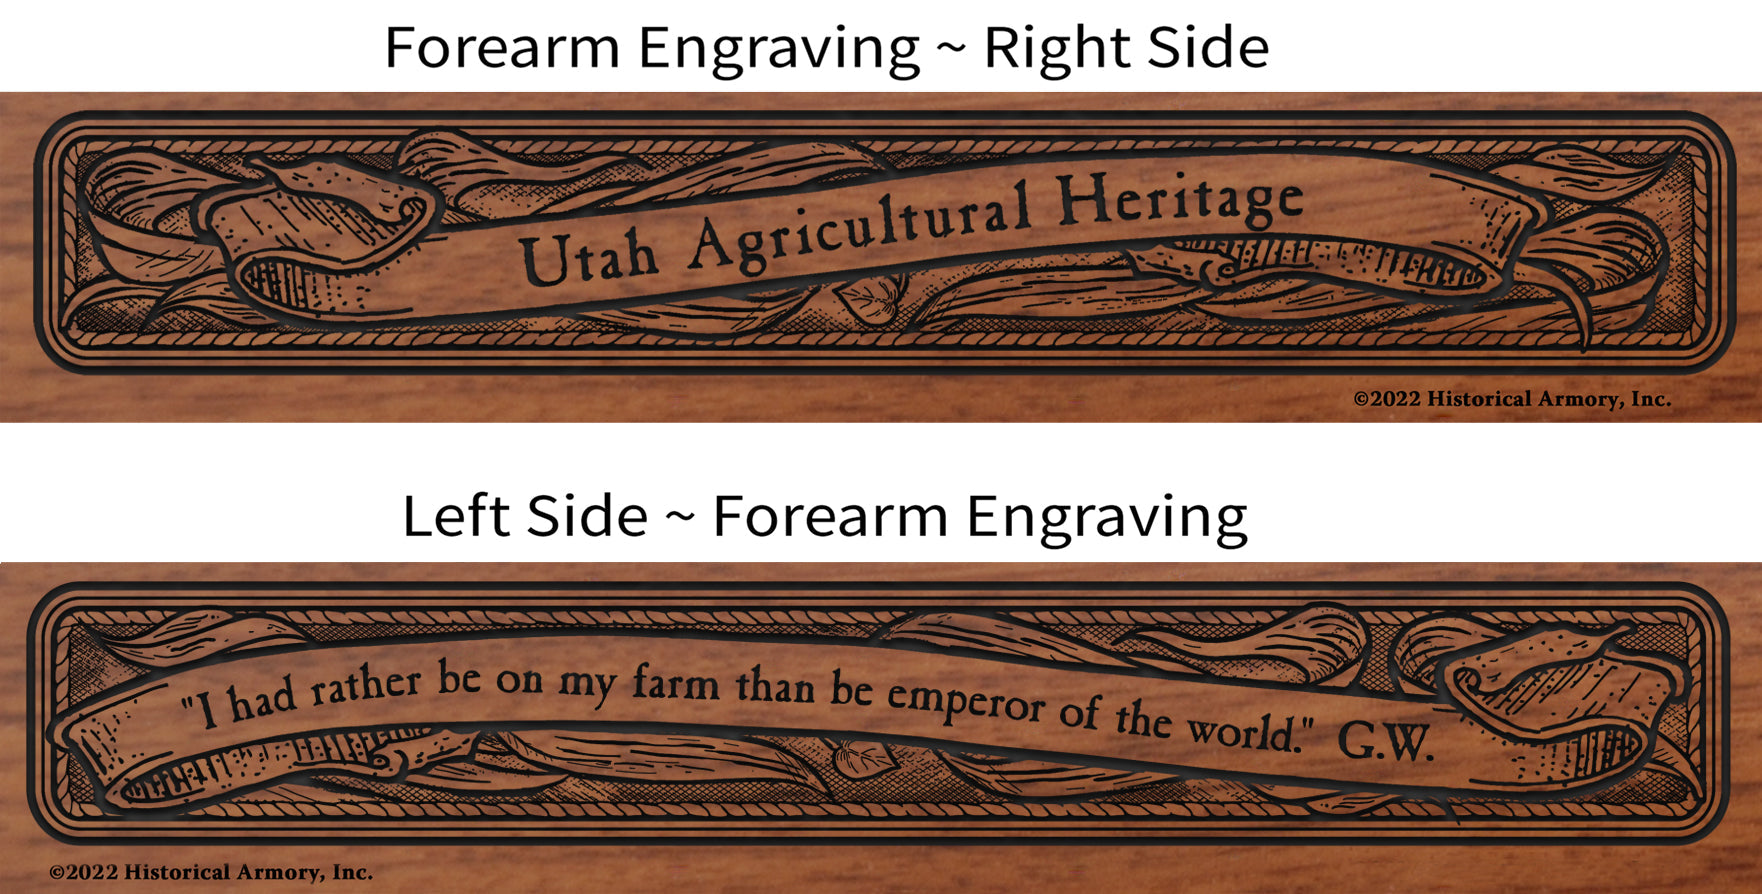 Utah Agricultural Heritage Engraved Rifle Forearm